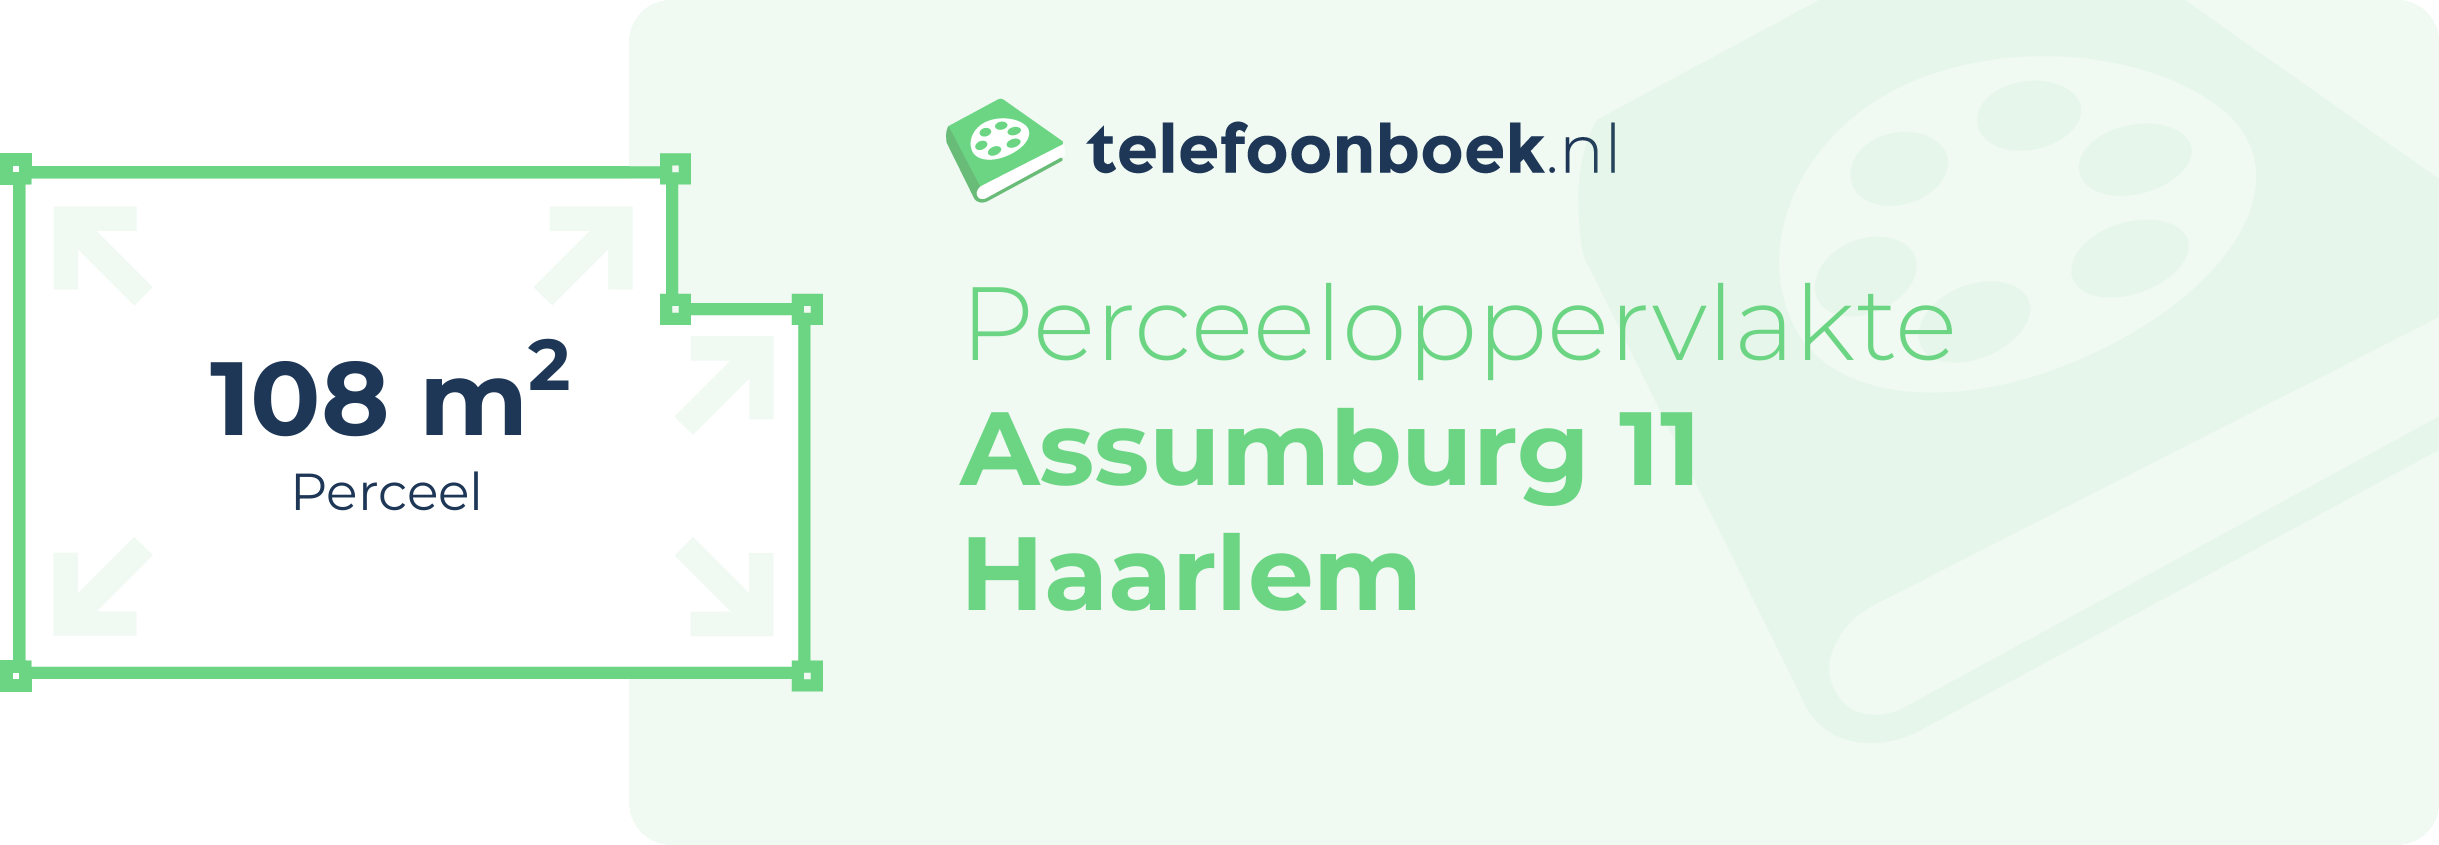 Perceeloppervlakte Assumburg 11 Haarlem